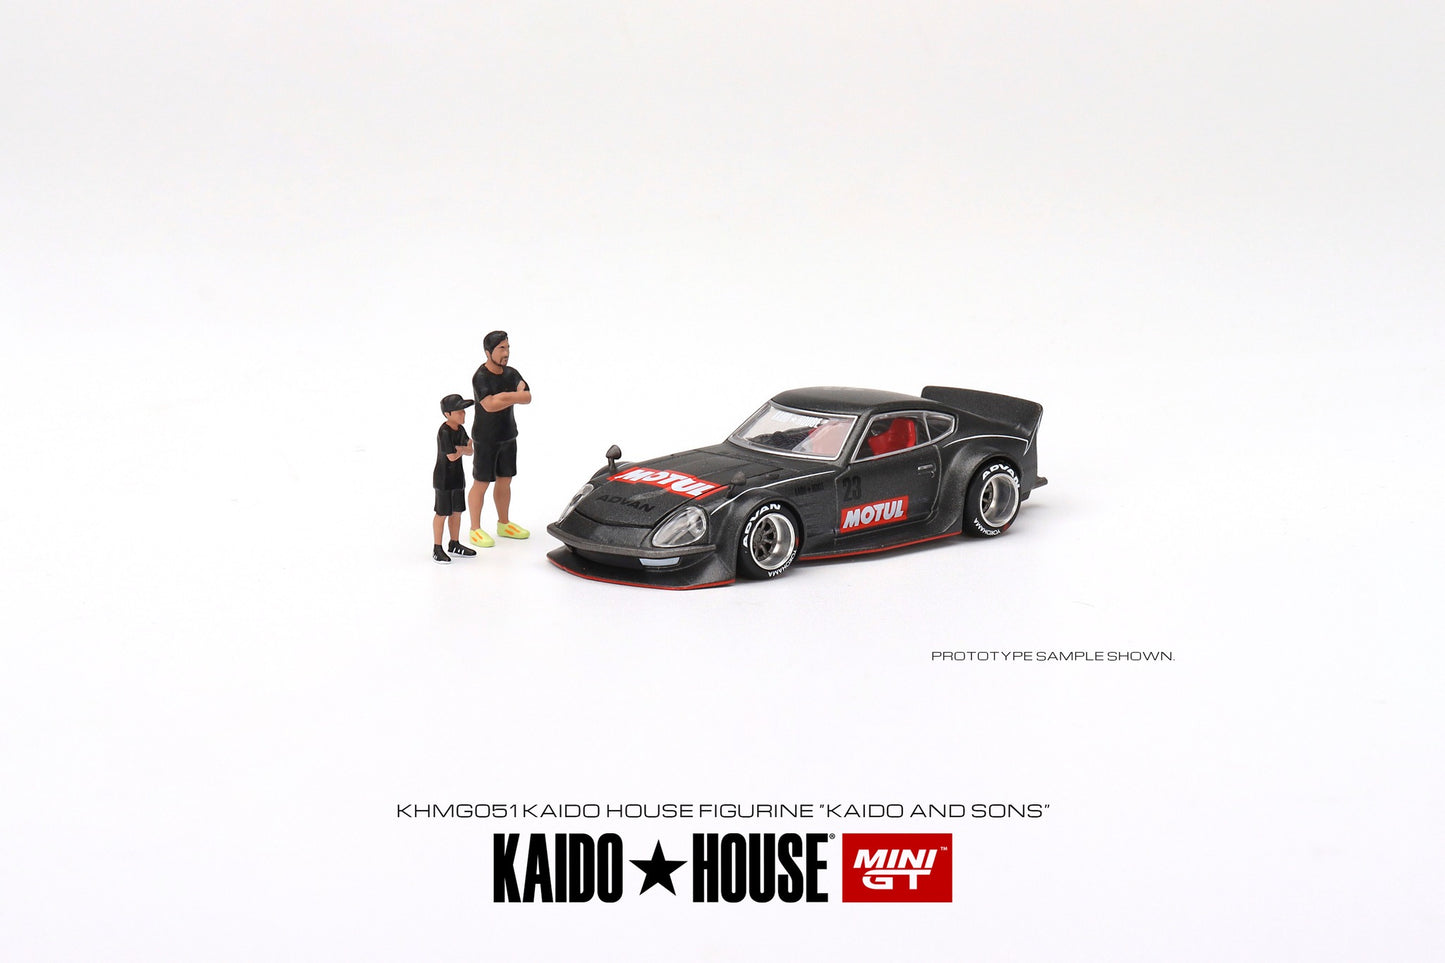 Mini GT x Kaido House Kaido & Sons Figures